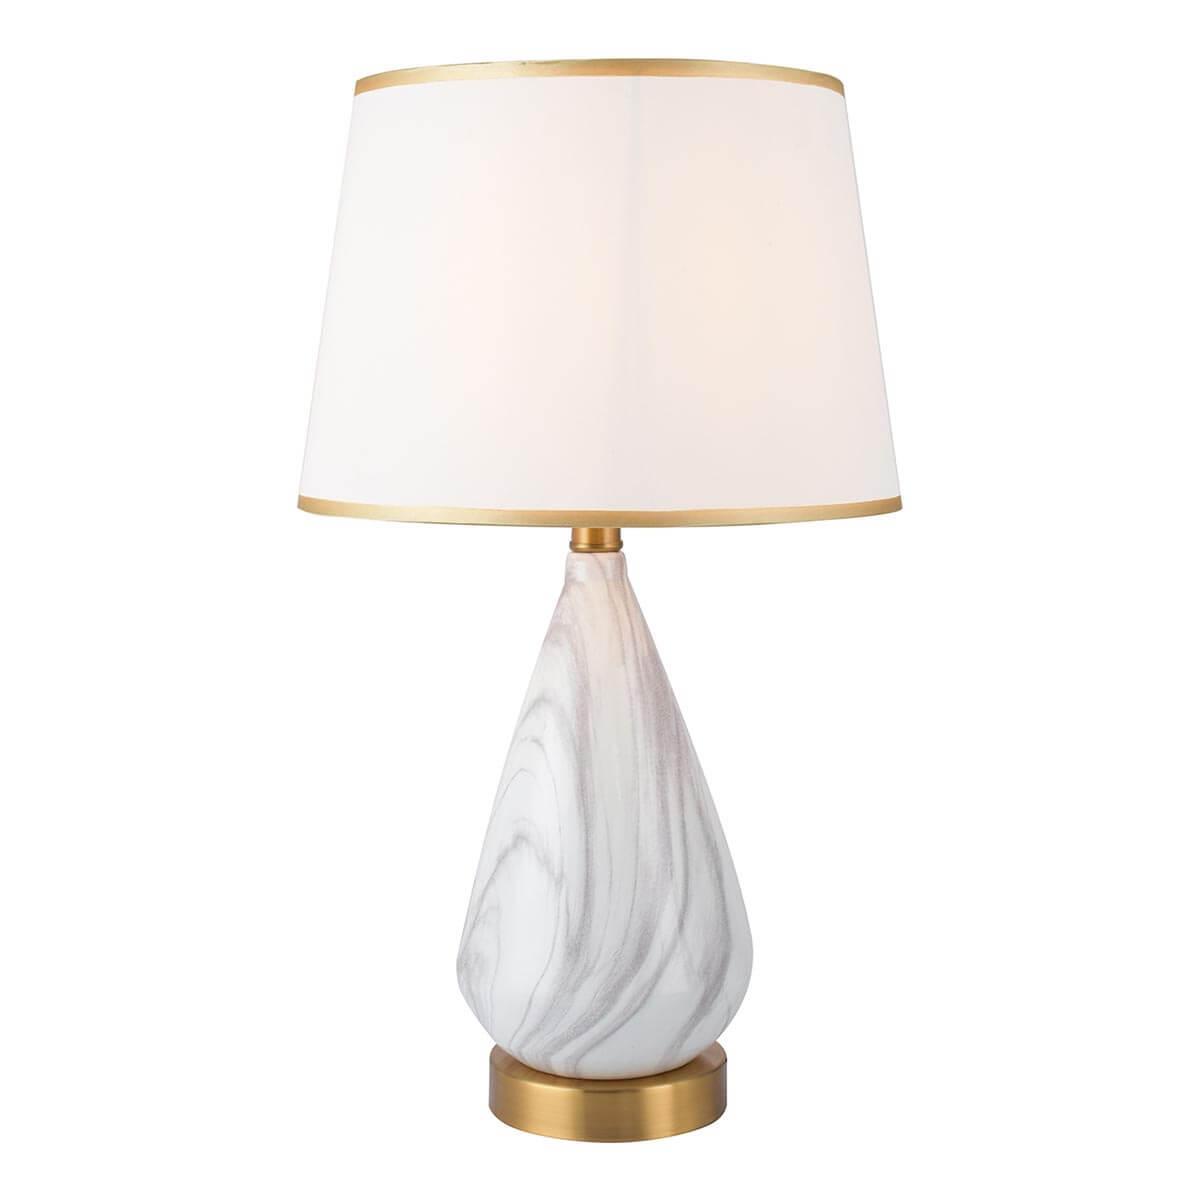 Настольная лампа Toplight Gwendoline TL0292A-T лампа настольная 38045 1 e14 40вт белый с золотой патиной 22х22х32 см